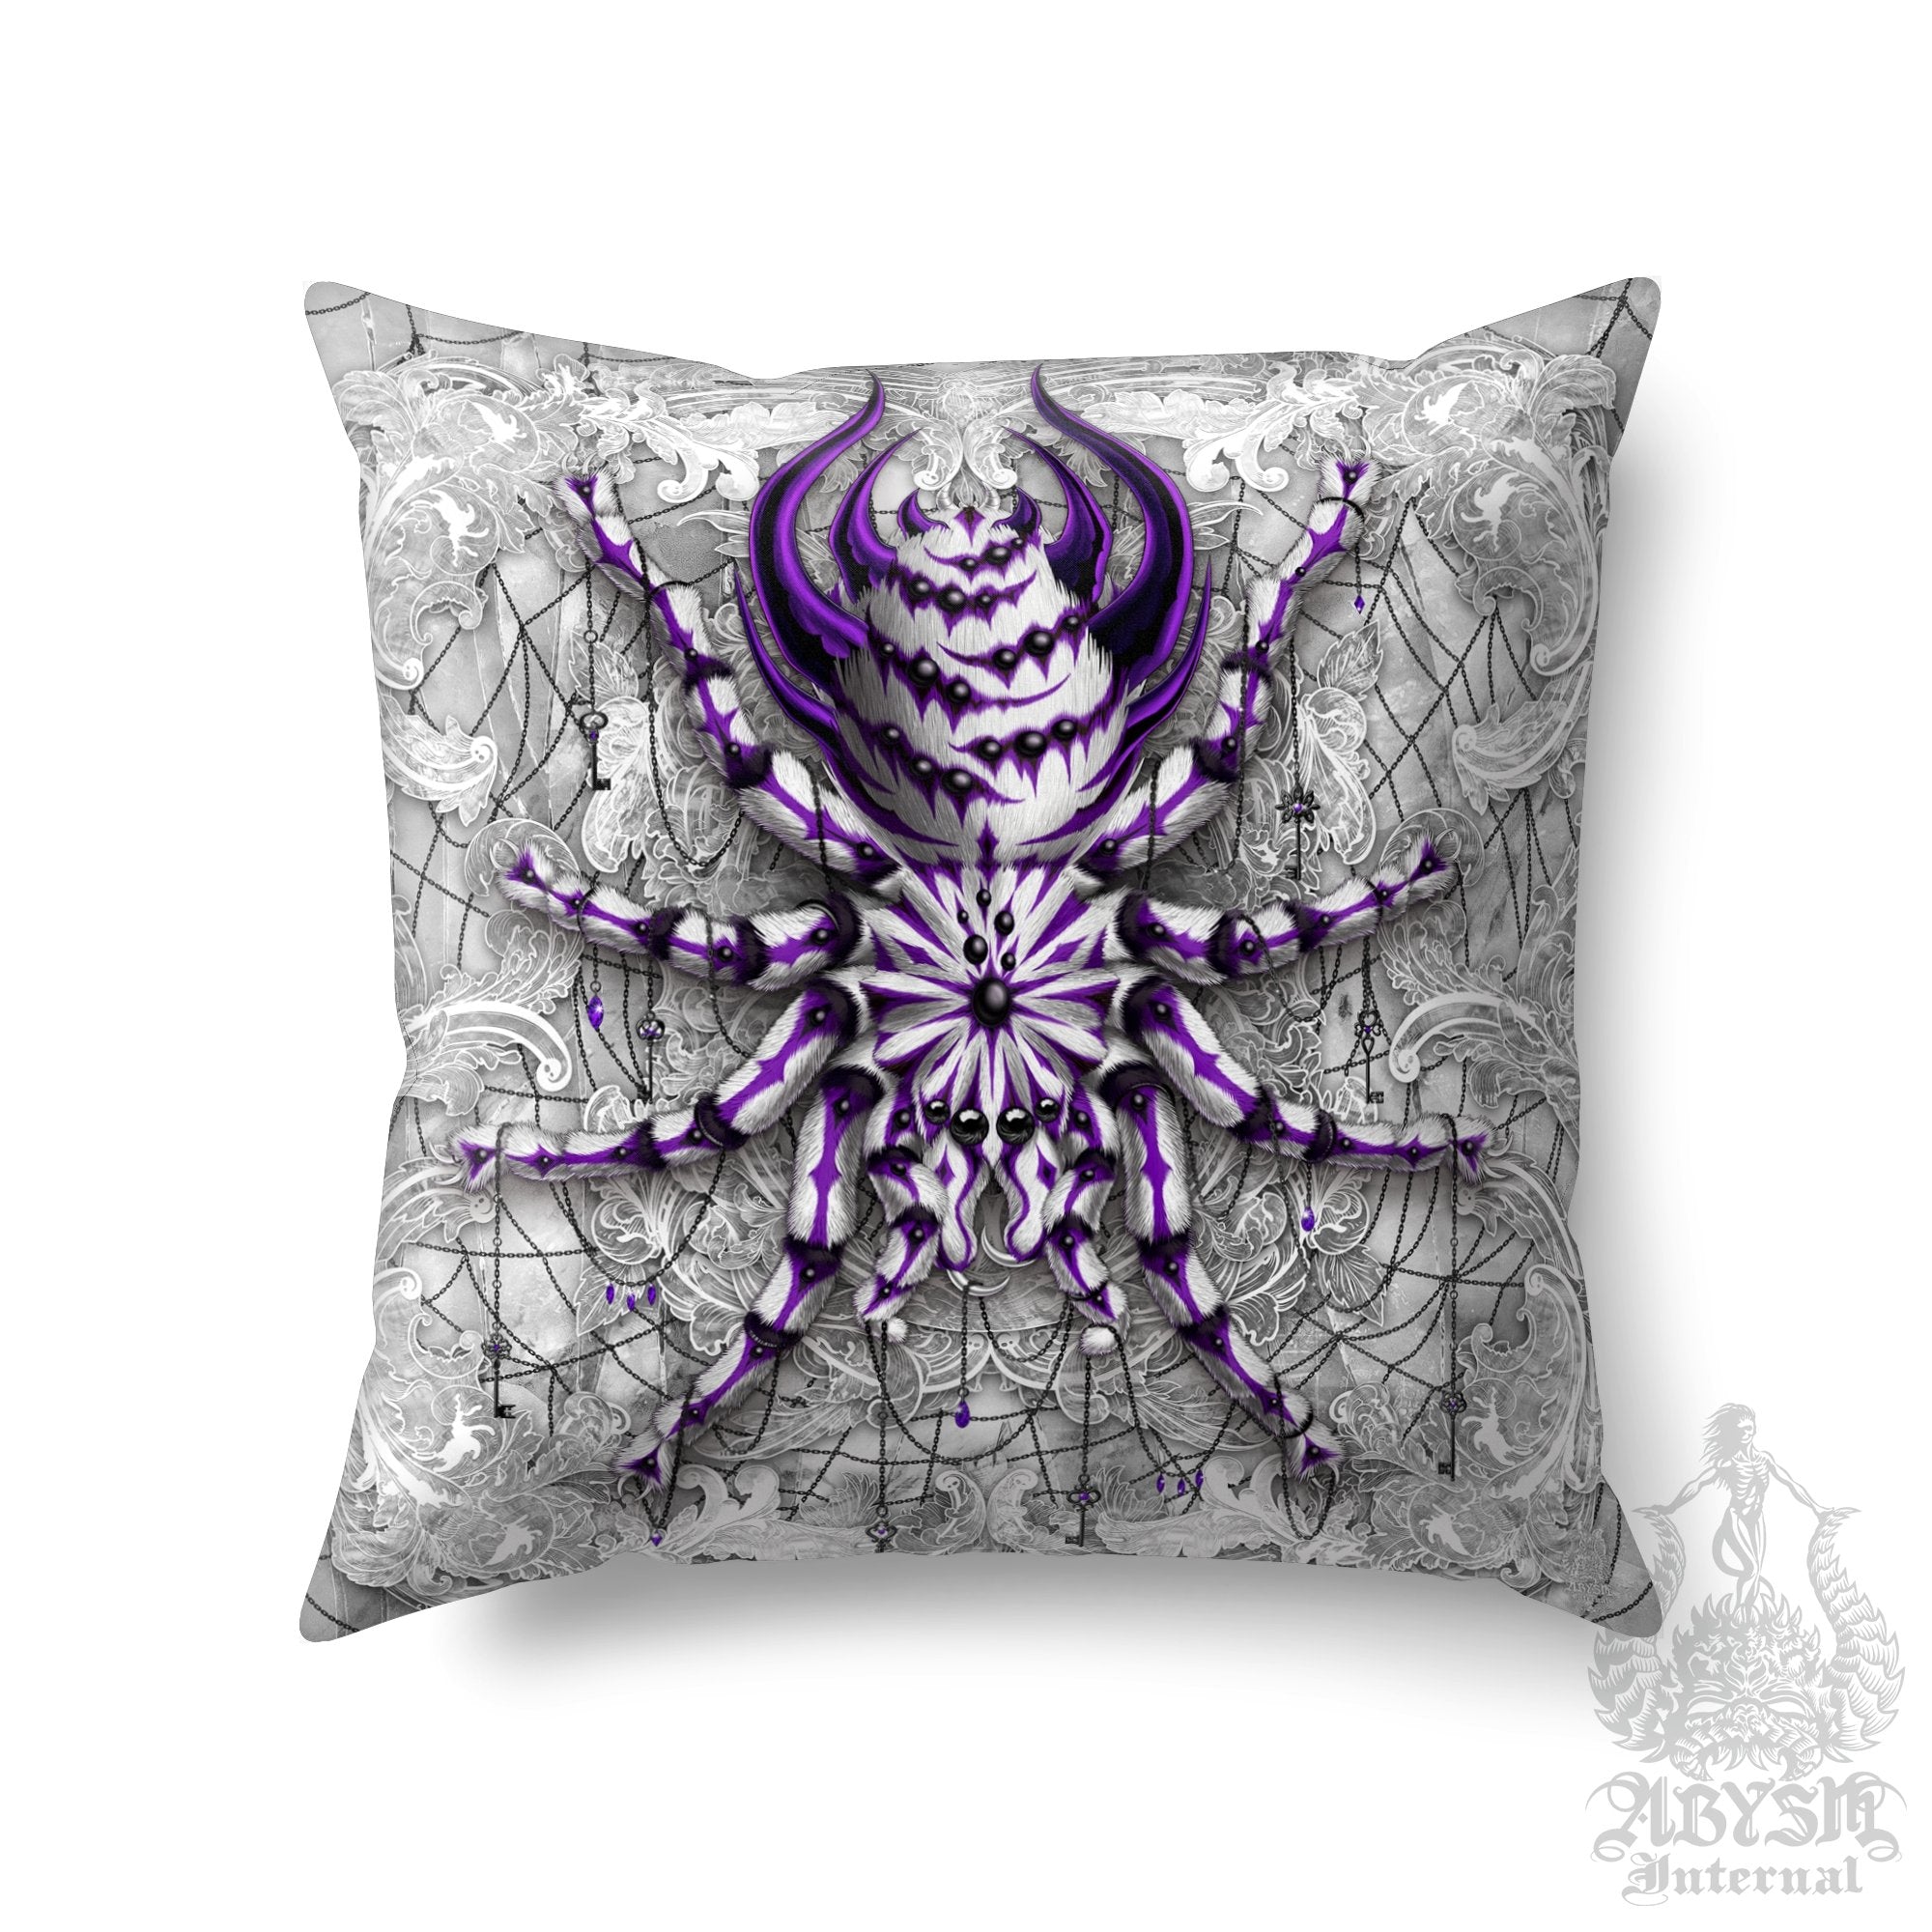 White Goth Throw Pillow, Decorative Accent Cushion, Gothic Room Decor, Alternative Home - Tarantula, Spider, Stone, Purple - Abysm Internal